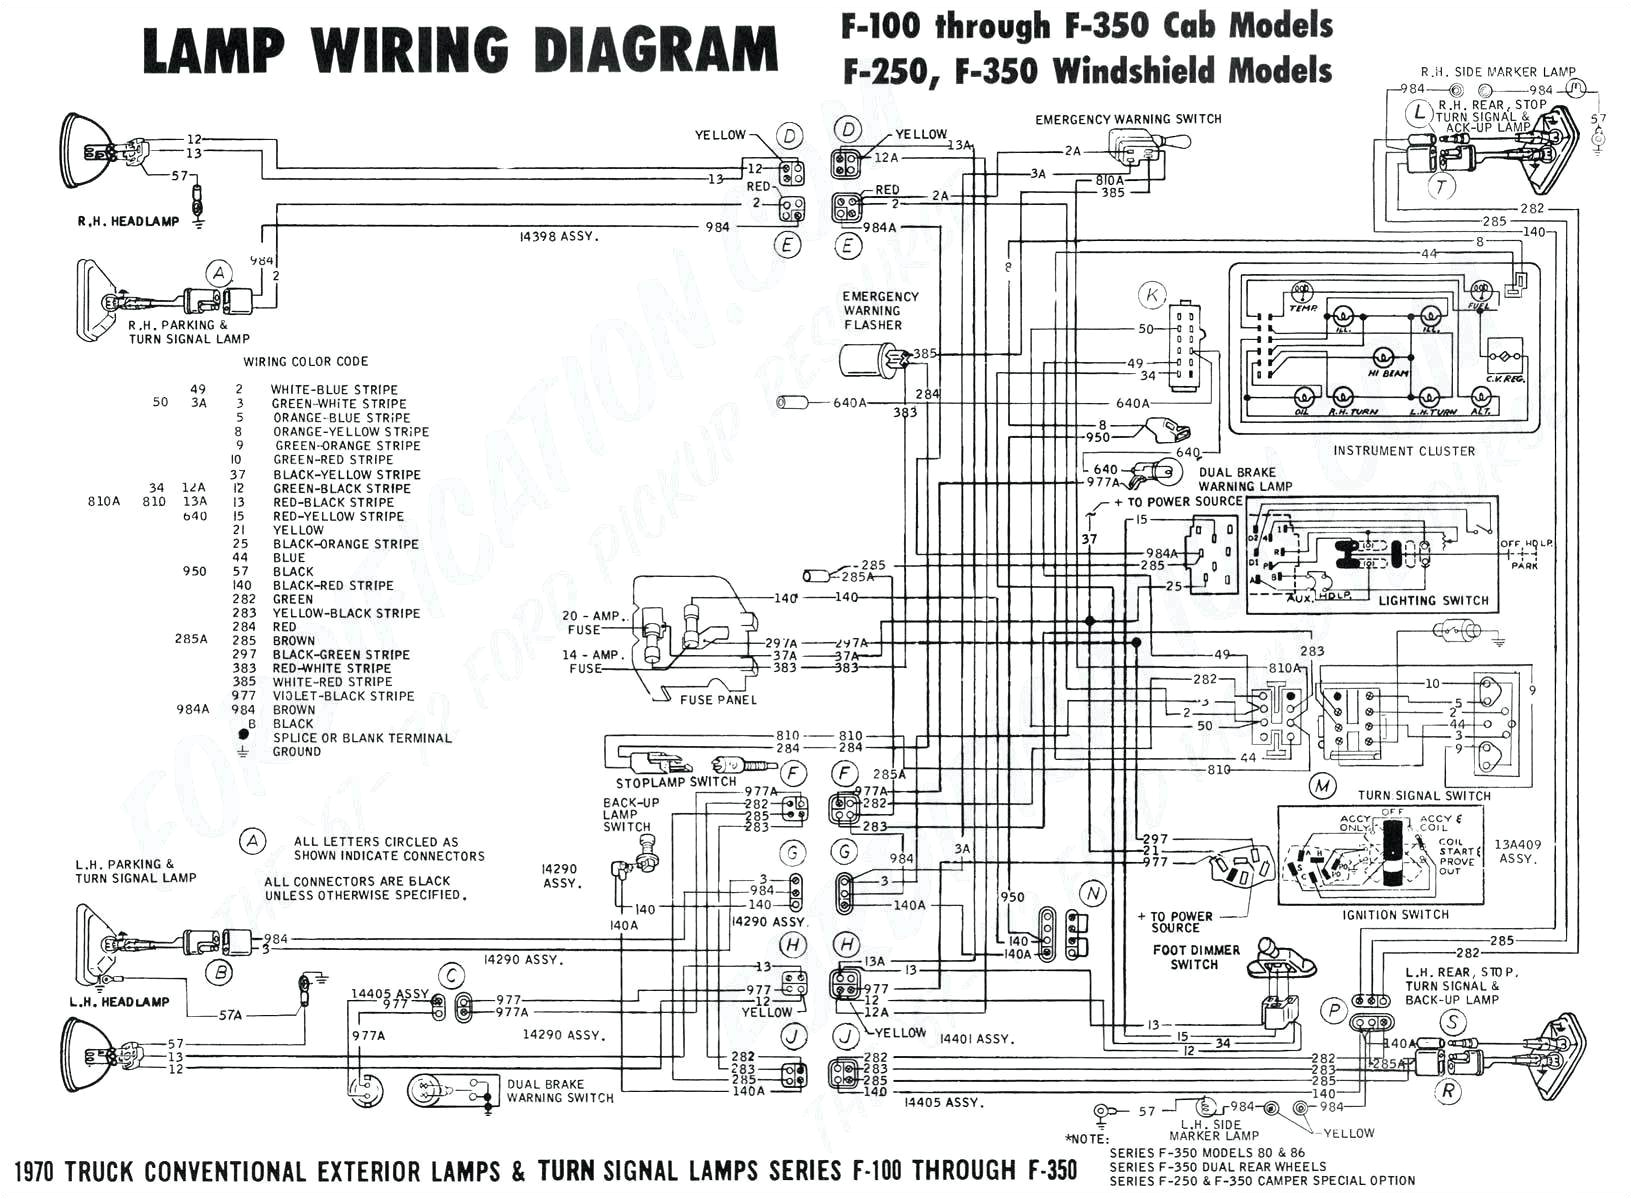 tail lamp wiring diagram 2000 ford mustang wiring diagram 1994 mustang gt fog light wiring diagram